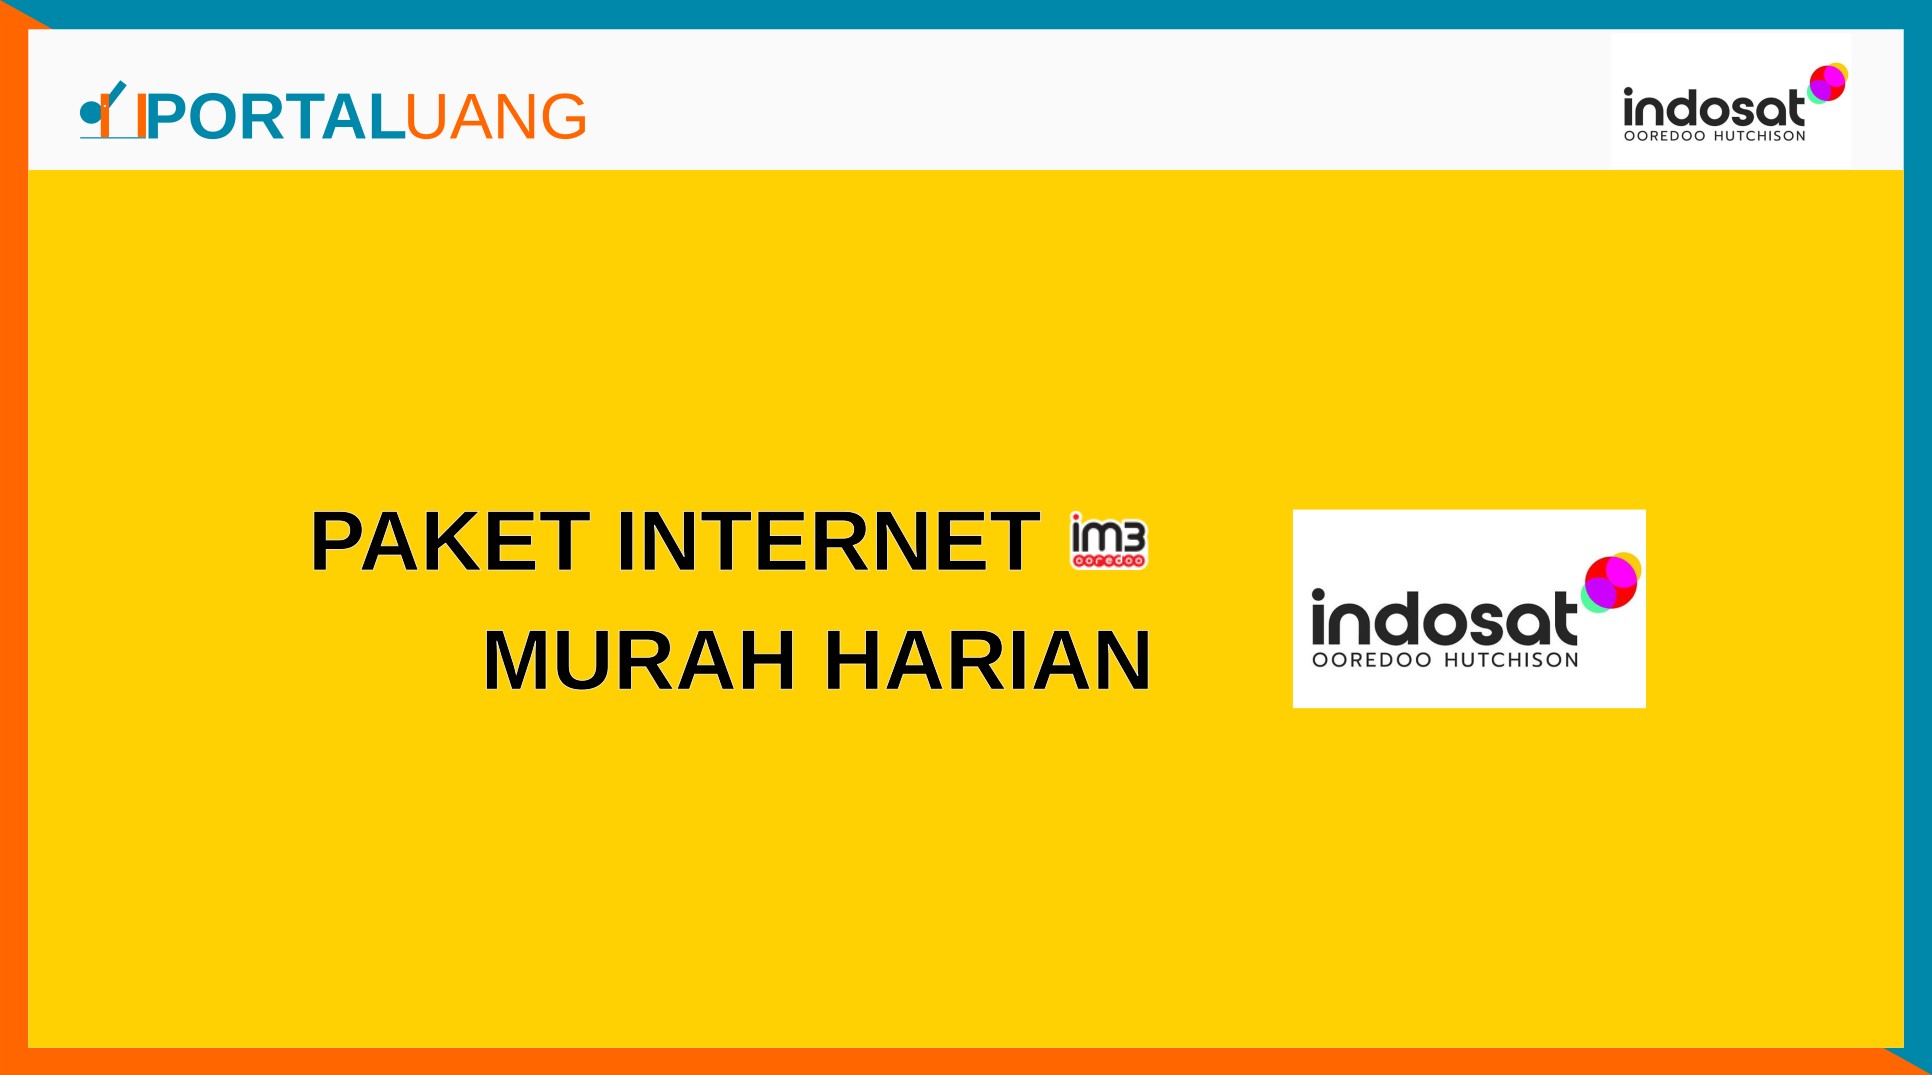 2 Paket Internet Indosat (IM3) Murah Harian (1 Hari) 2022